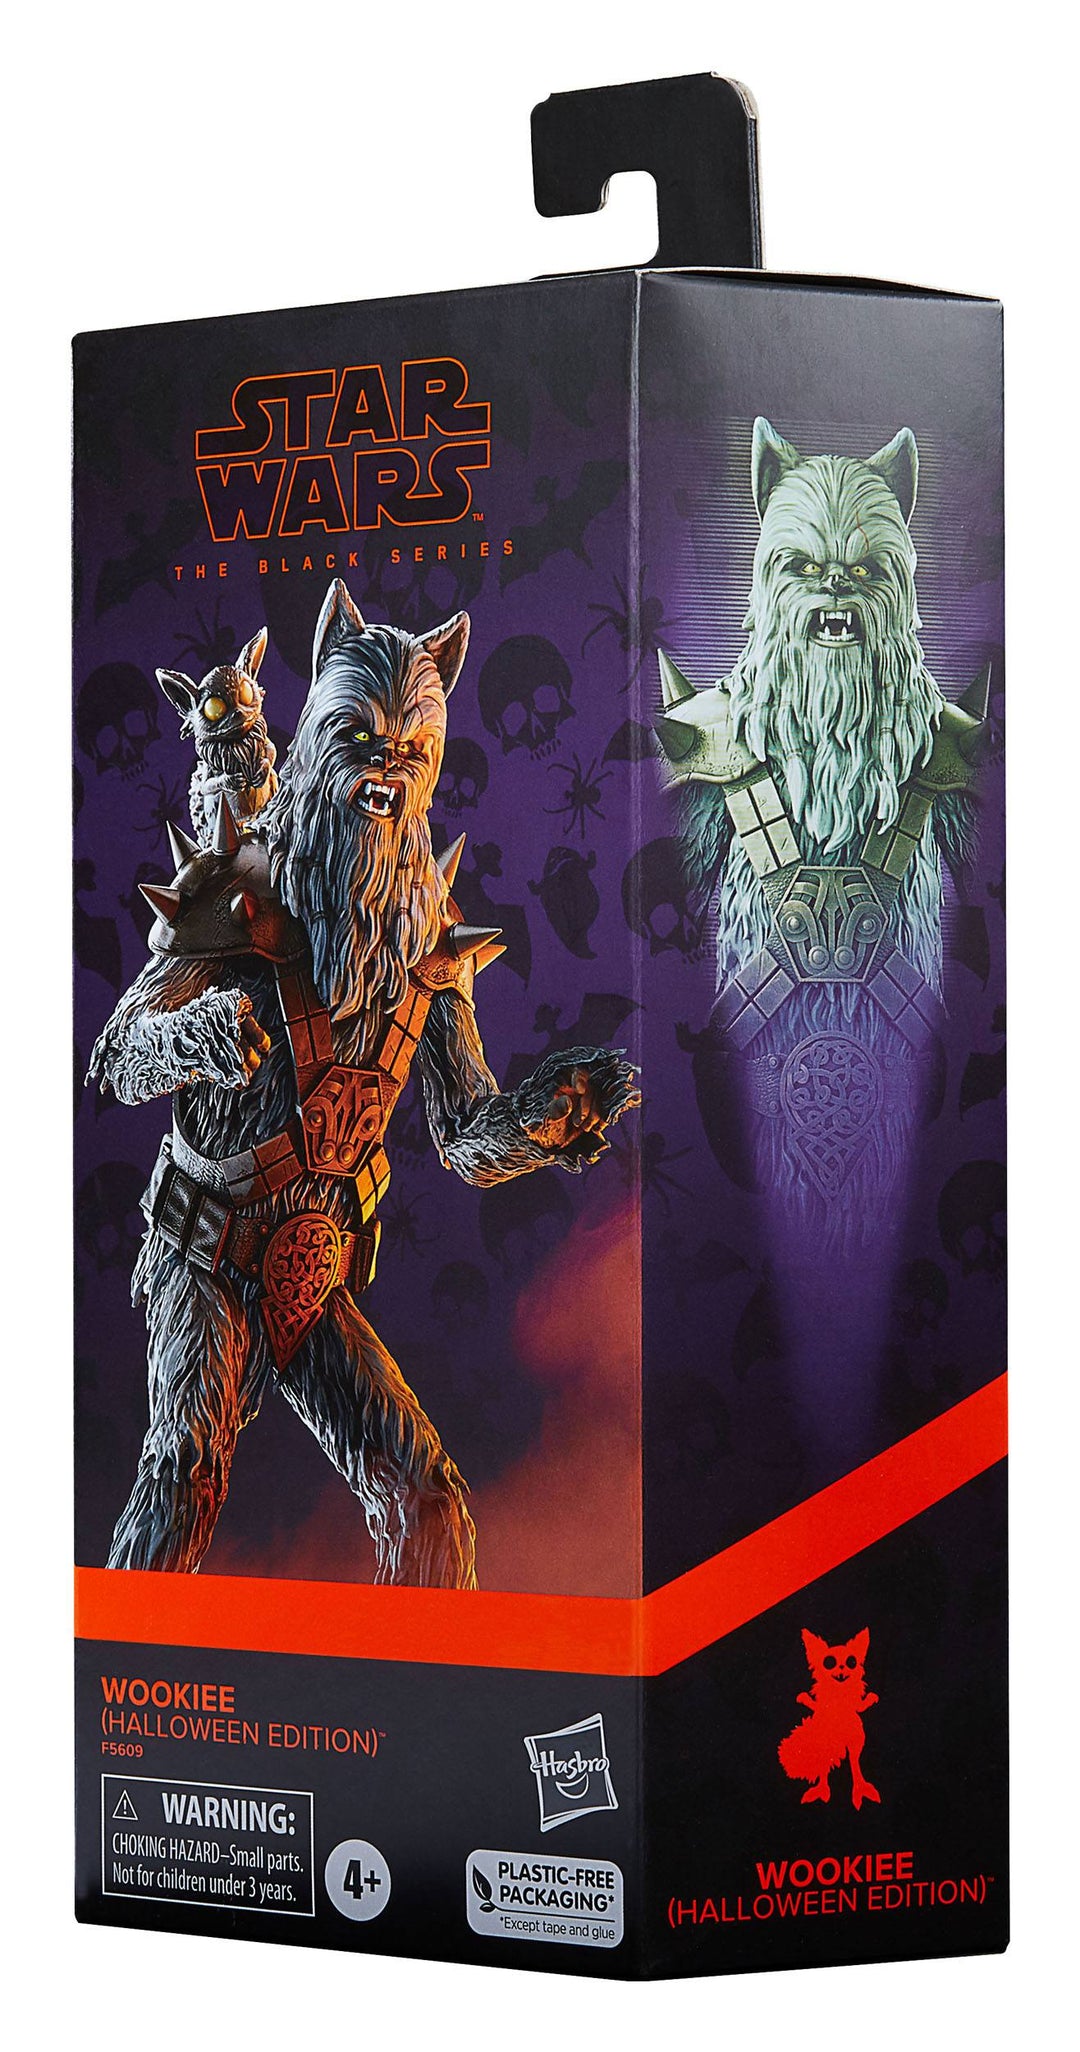 Star Wars The Black Series Wookiee (Halloween Edition) 6" Action Figure